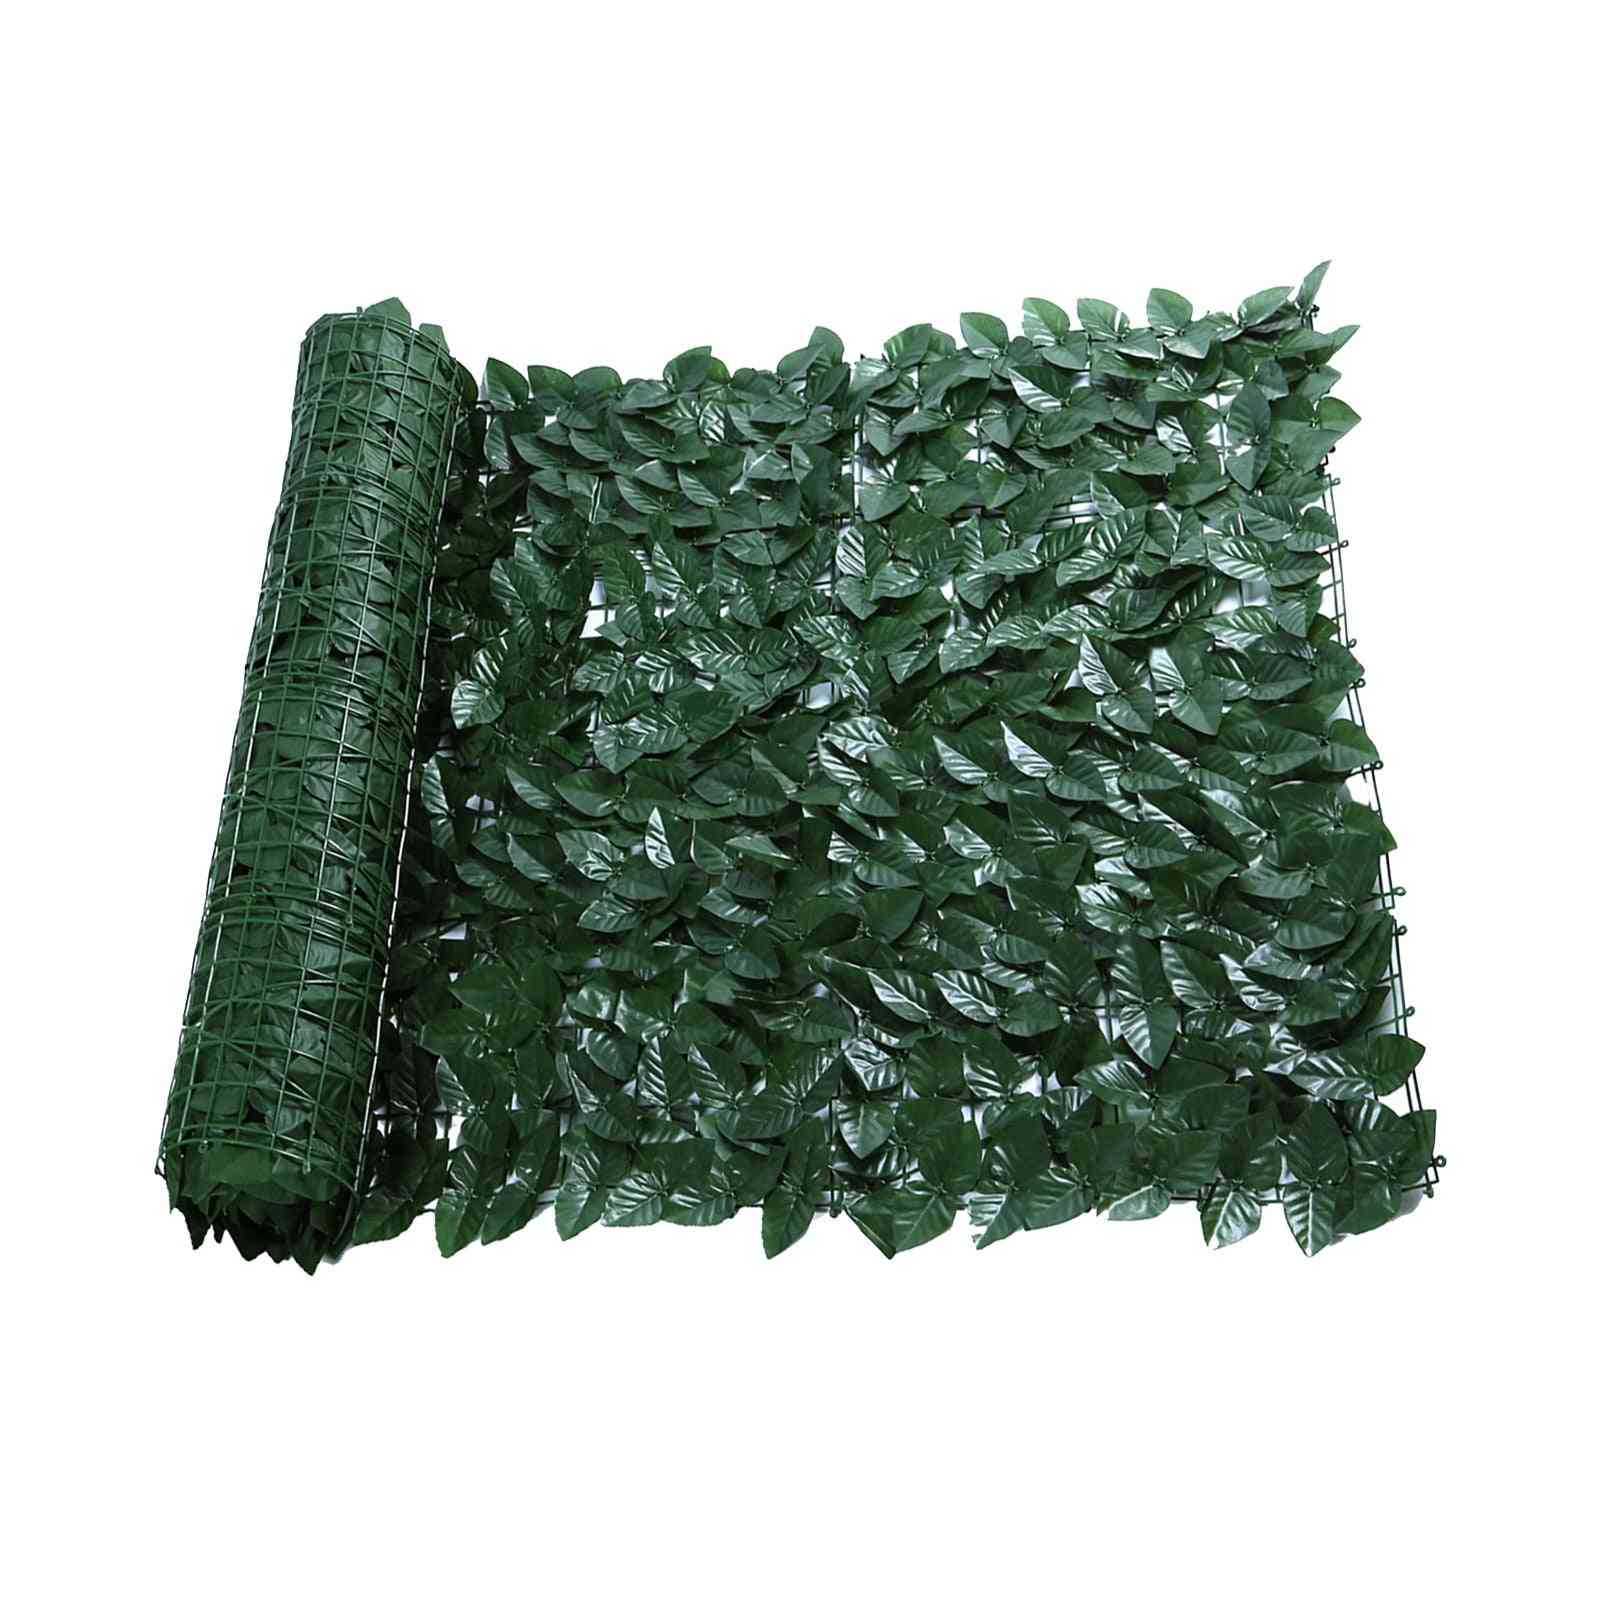 Artificial Ivy Hedge Screening Roll Green Leaf